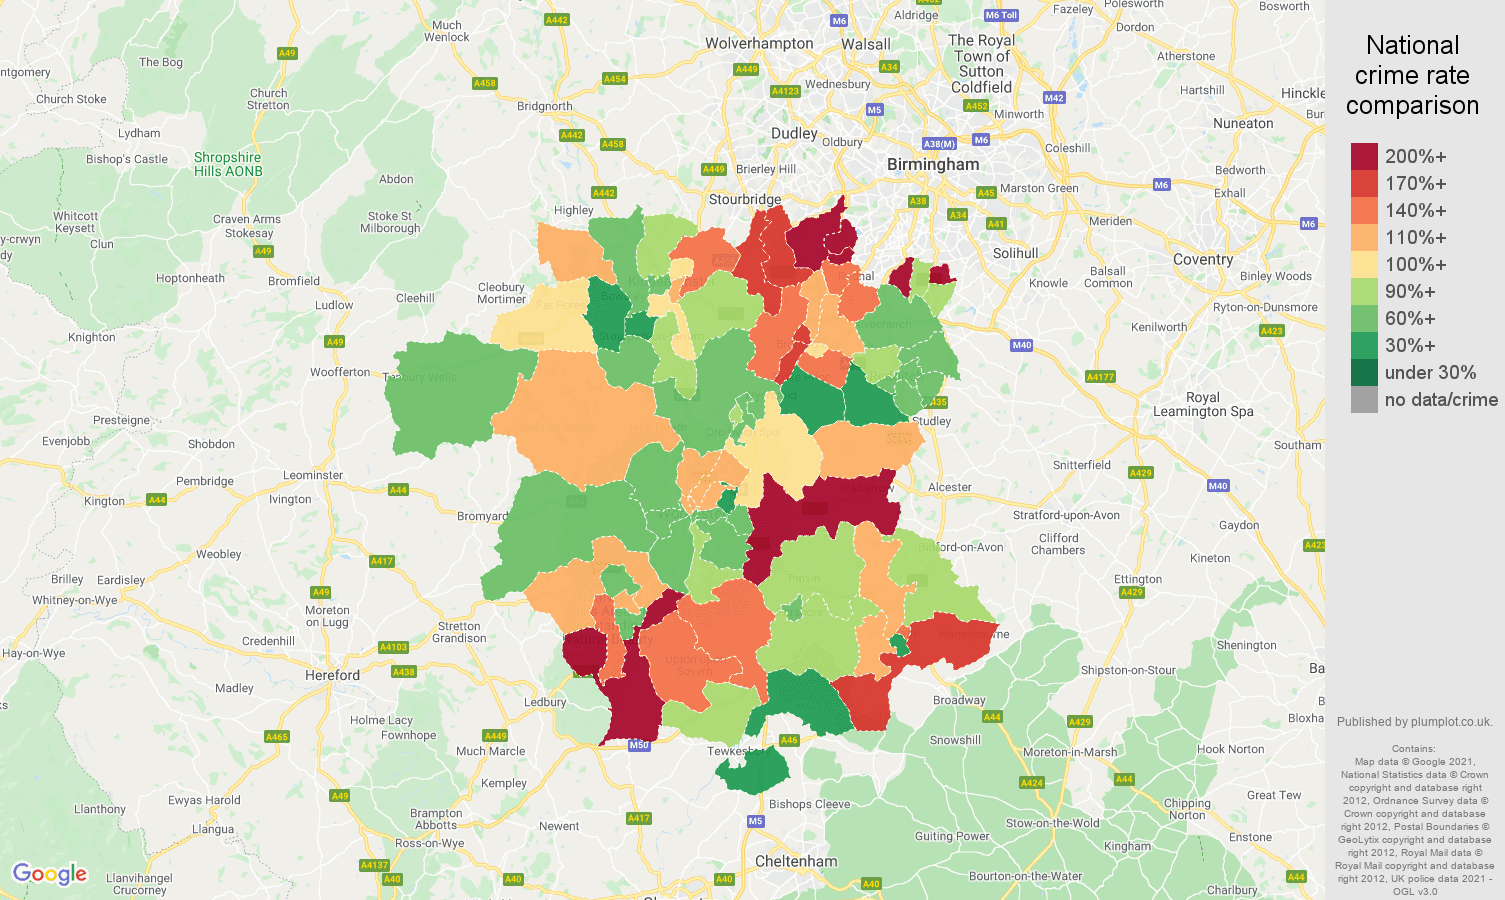 Worcestershire burglary crime rate comparison map